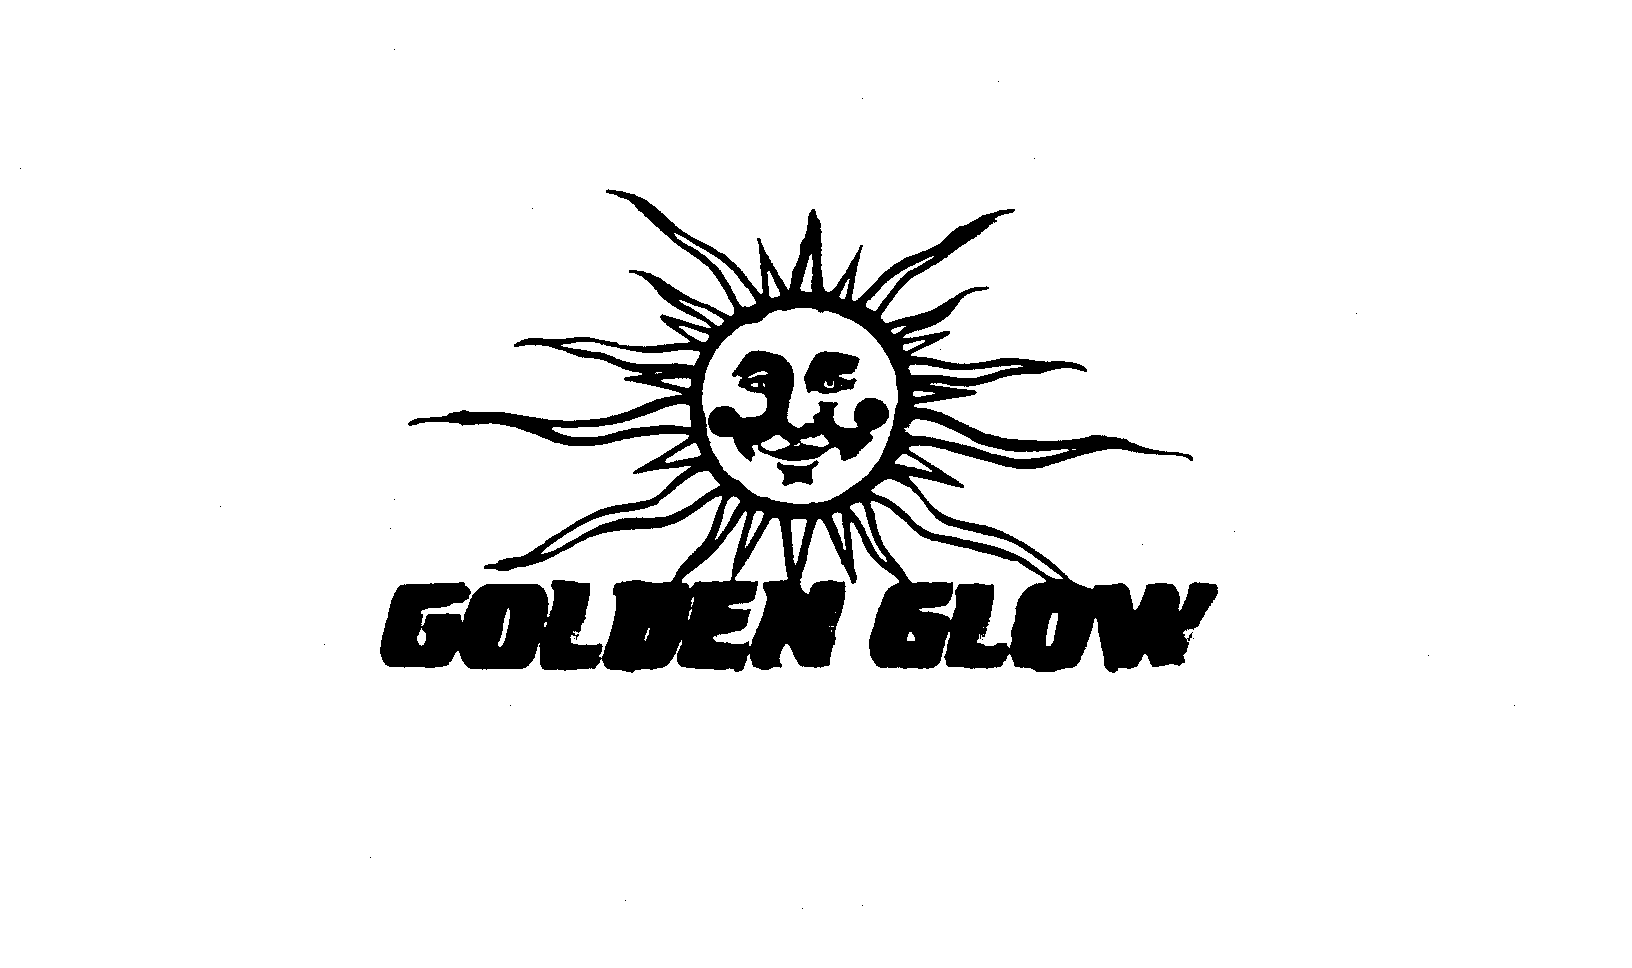 Trademark Logo GOLDEN GLOW